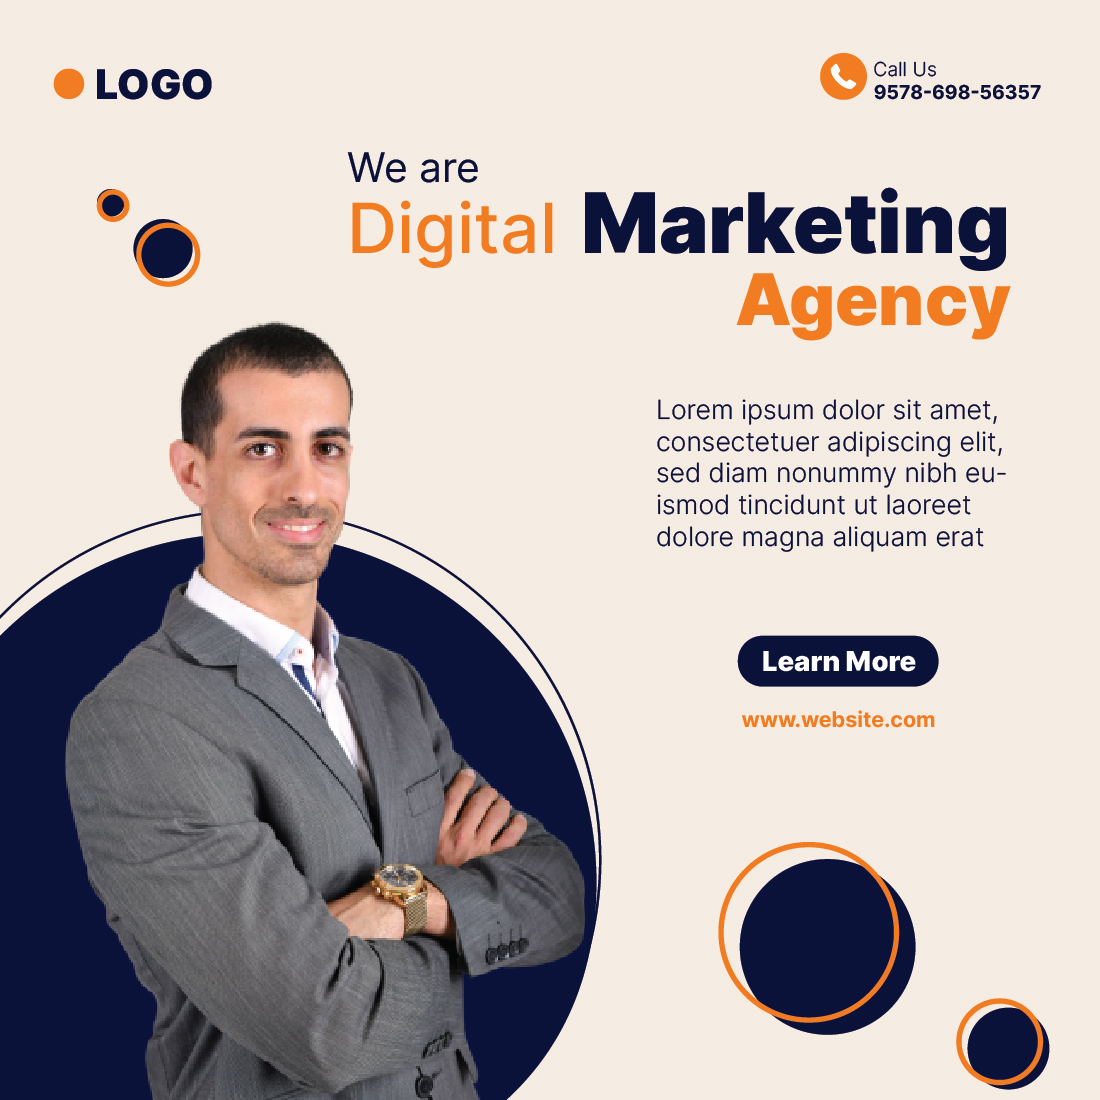 Digital Marketing Agency and Corporate vector Social media post previews.